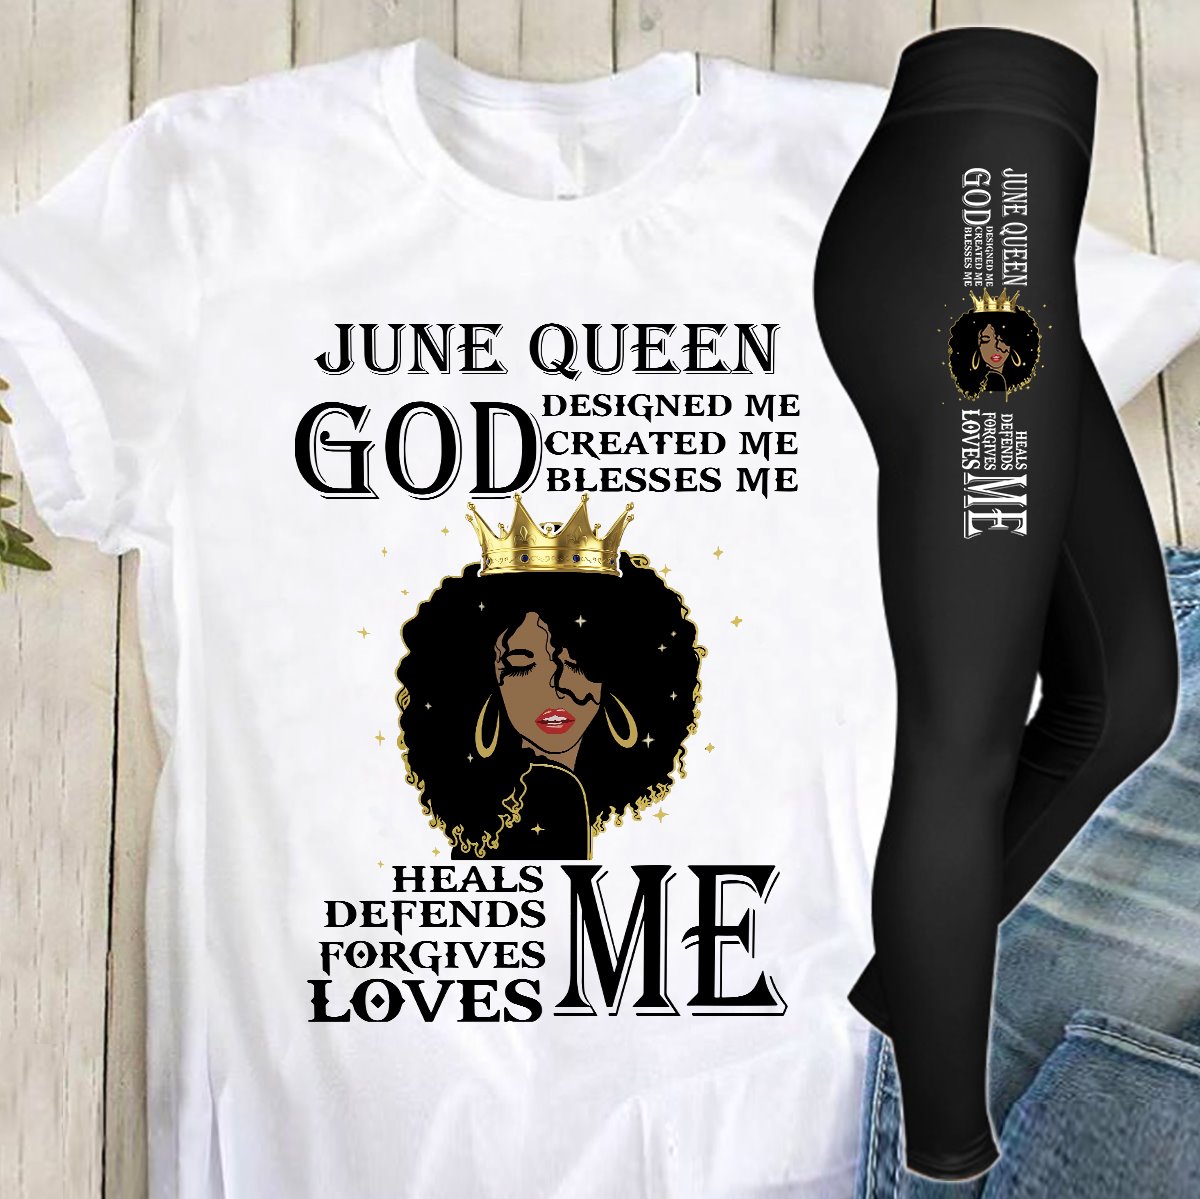 June queen god designed me, created me, blesses me, heals me, fefends me, forgives me